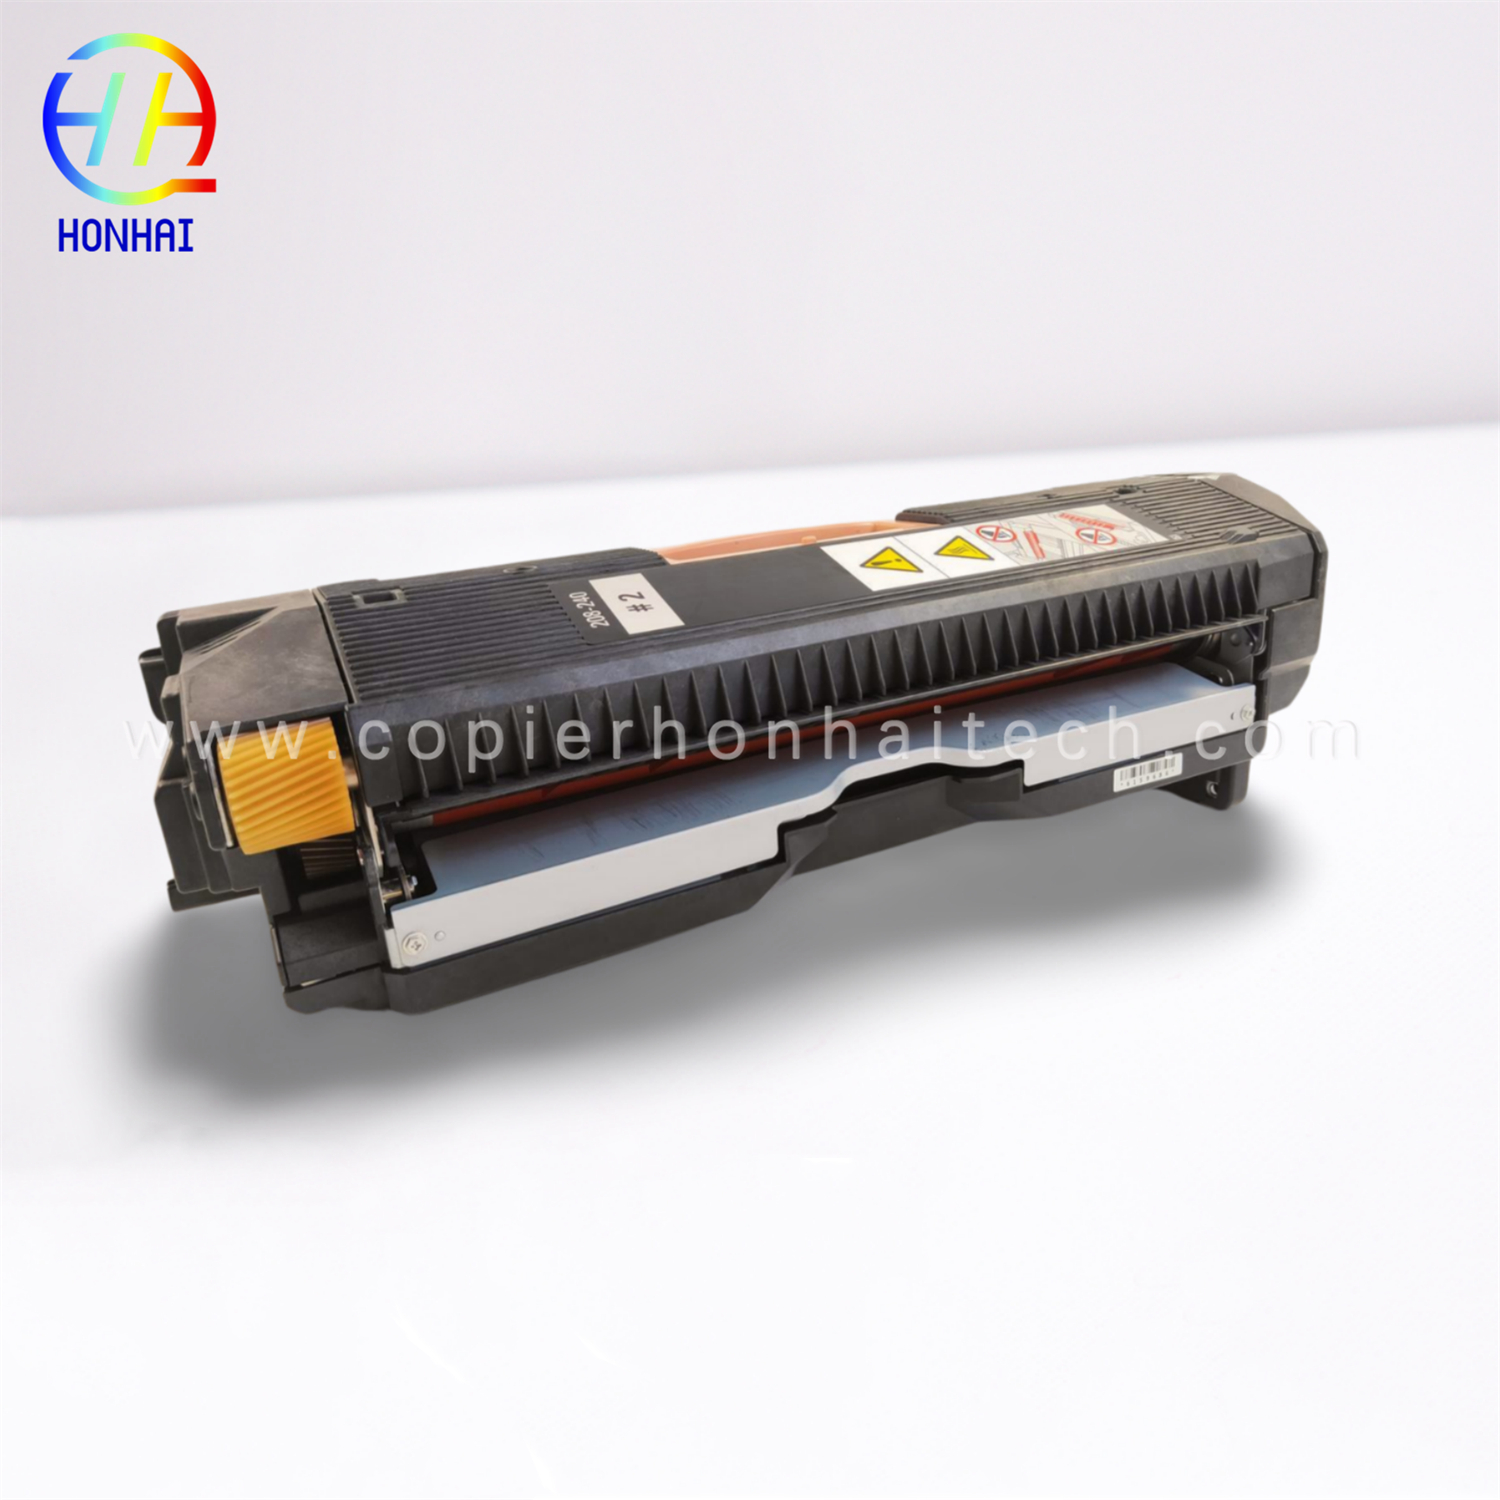 https://www.copierhonhaitech.com/fuser-cartridge-assy-220v-for-xerox-color-550-560-570-c60-c70-008r13065-641s00649-product